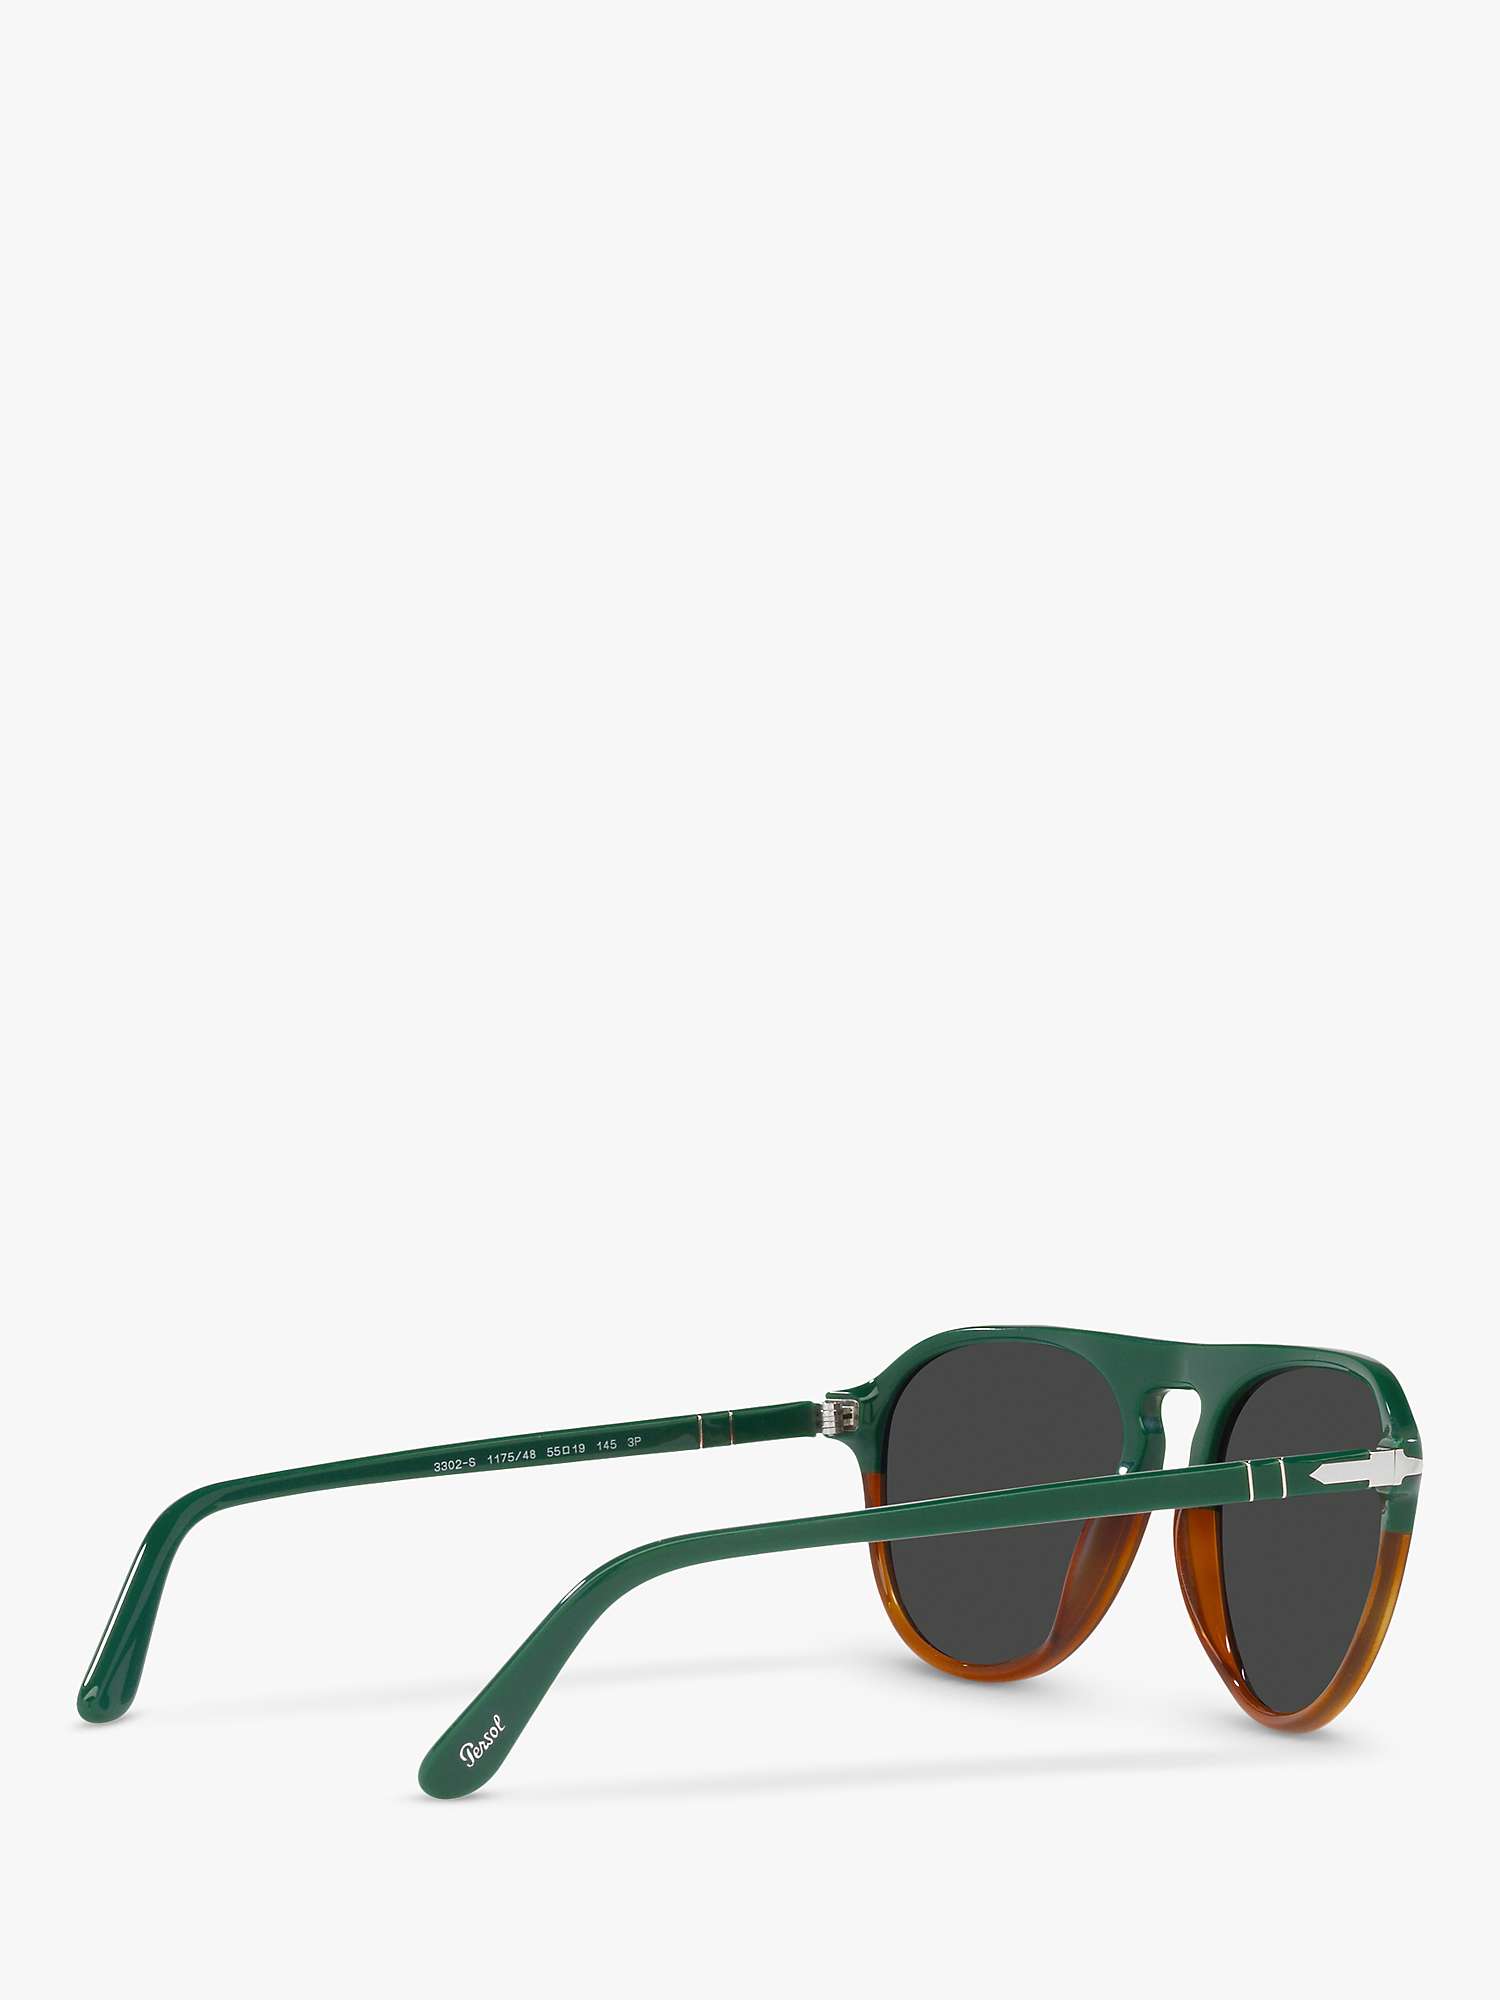 Buy Persol PO3302S Unisex Aviator Sunglasses, Green/Havana Chiara Online at johnlewis.com